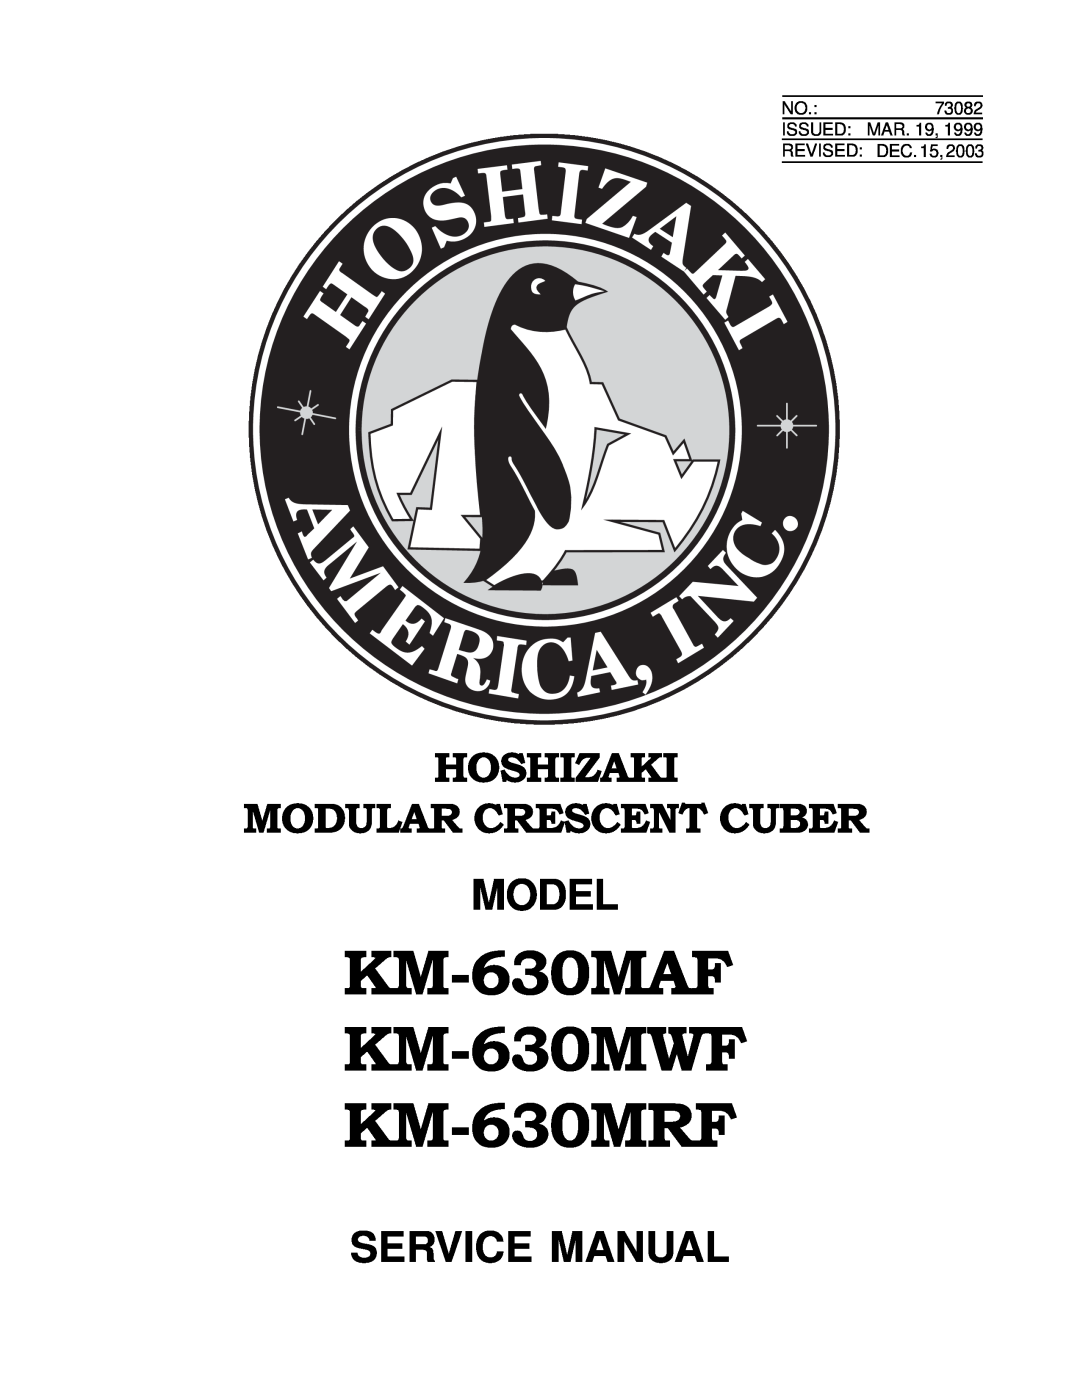 Hoshizaki service manual KM-630MAF KM-630MWF KM-630MRF, Hoshizaki Modular Crescent Cuber, Model, Service Manual 